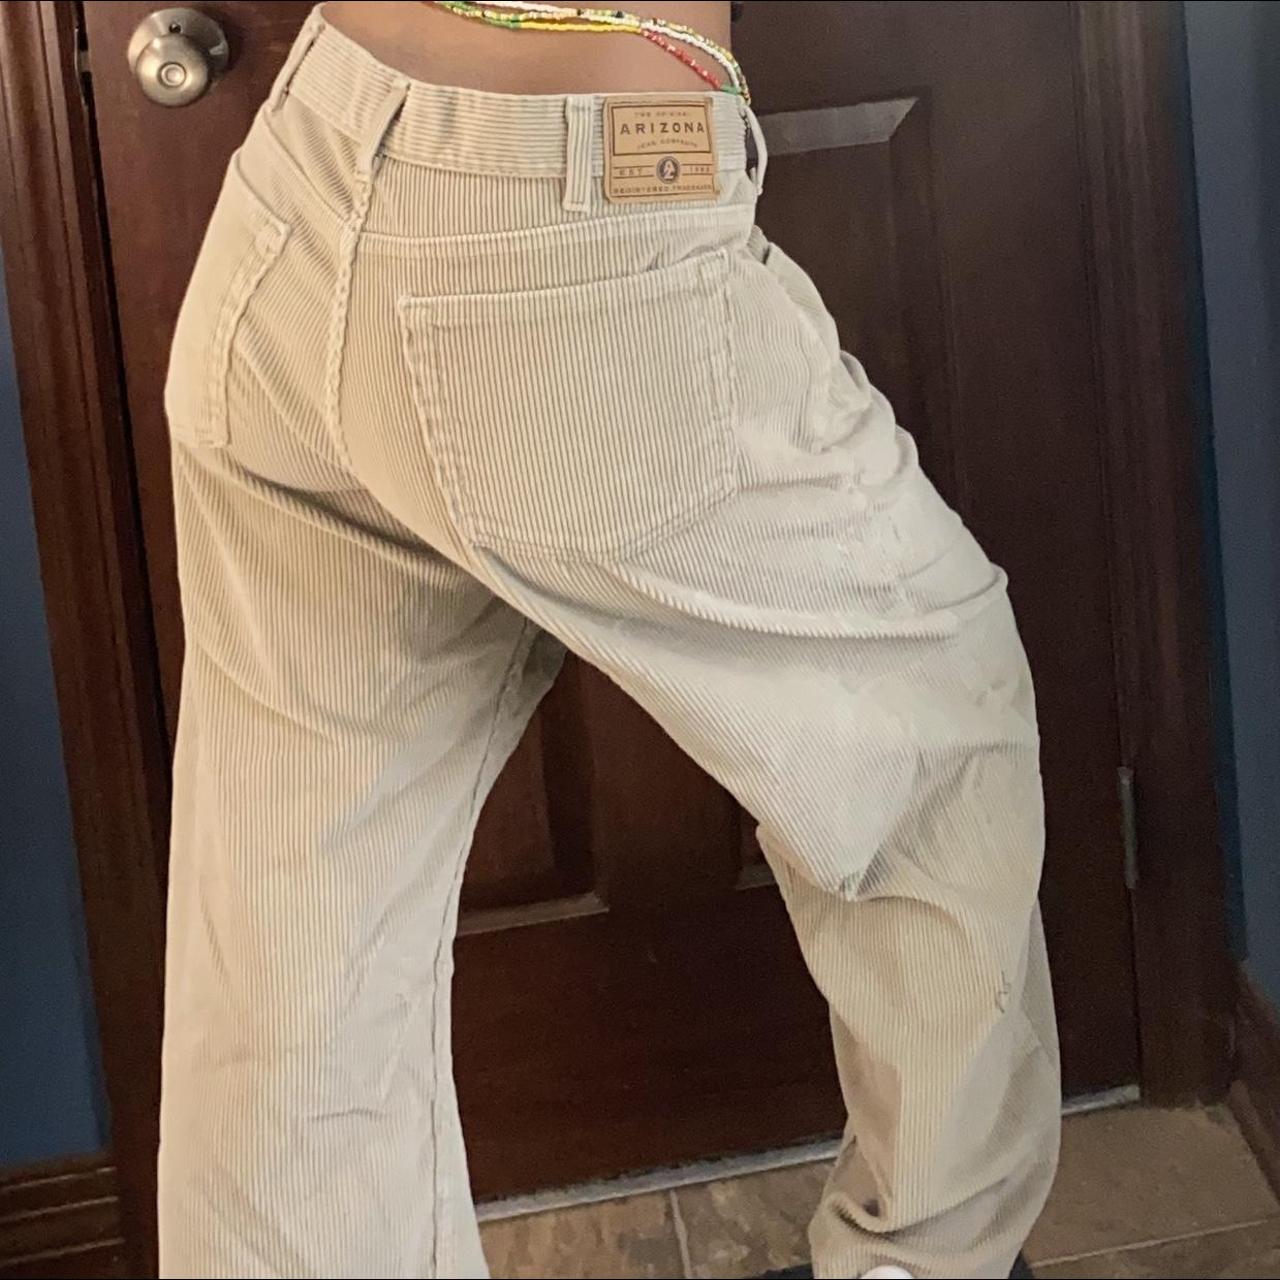 Product Image 1 - Tan corduroy pants 🤍
The perfect